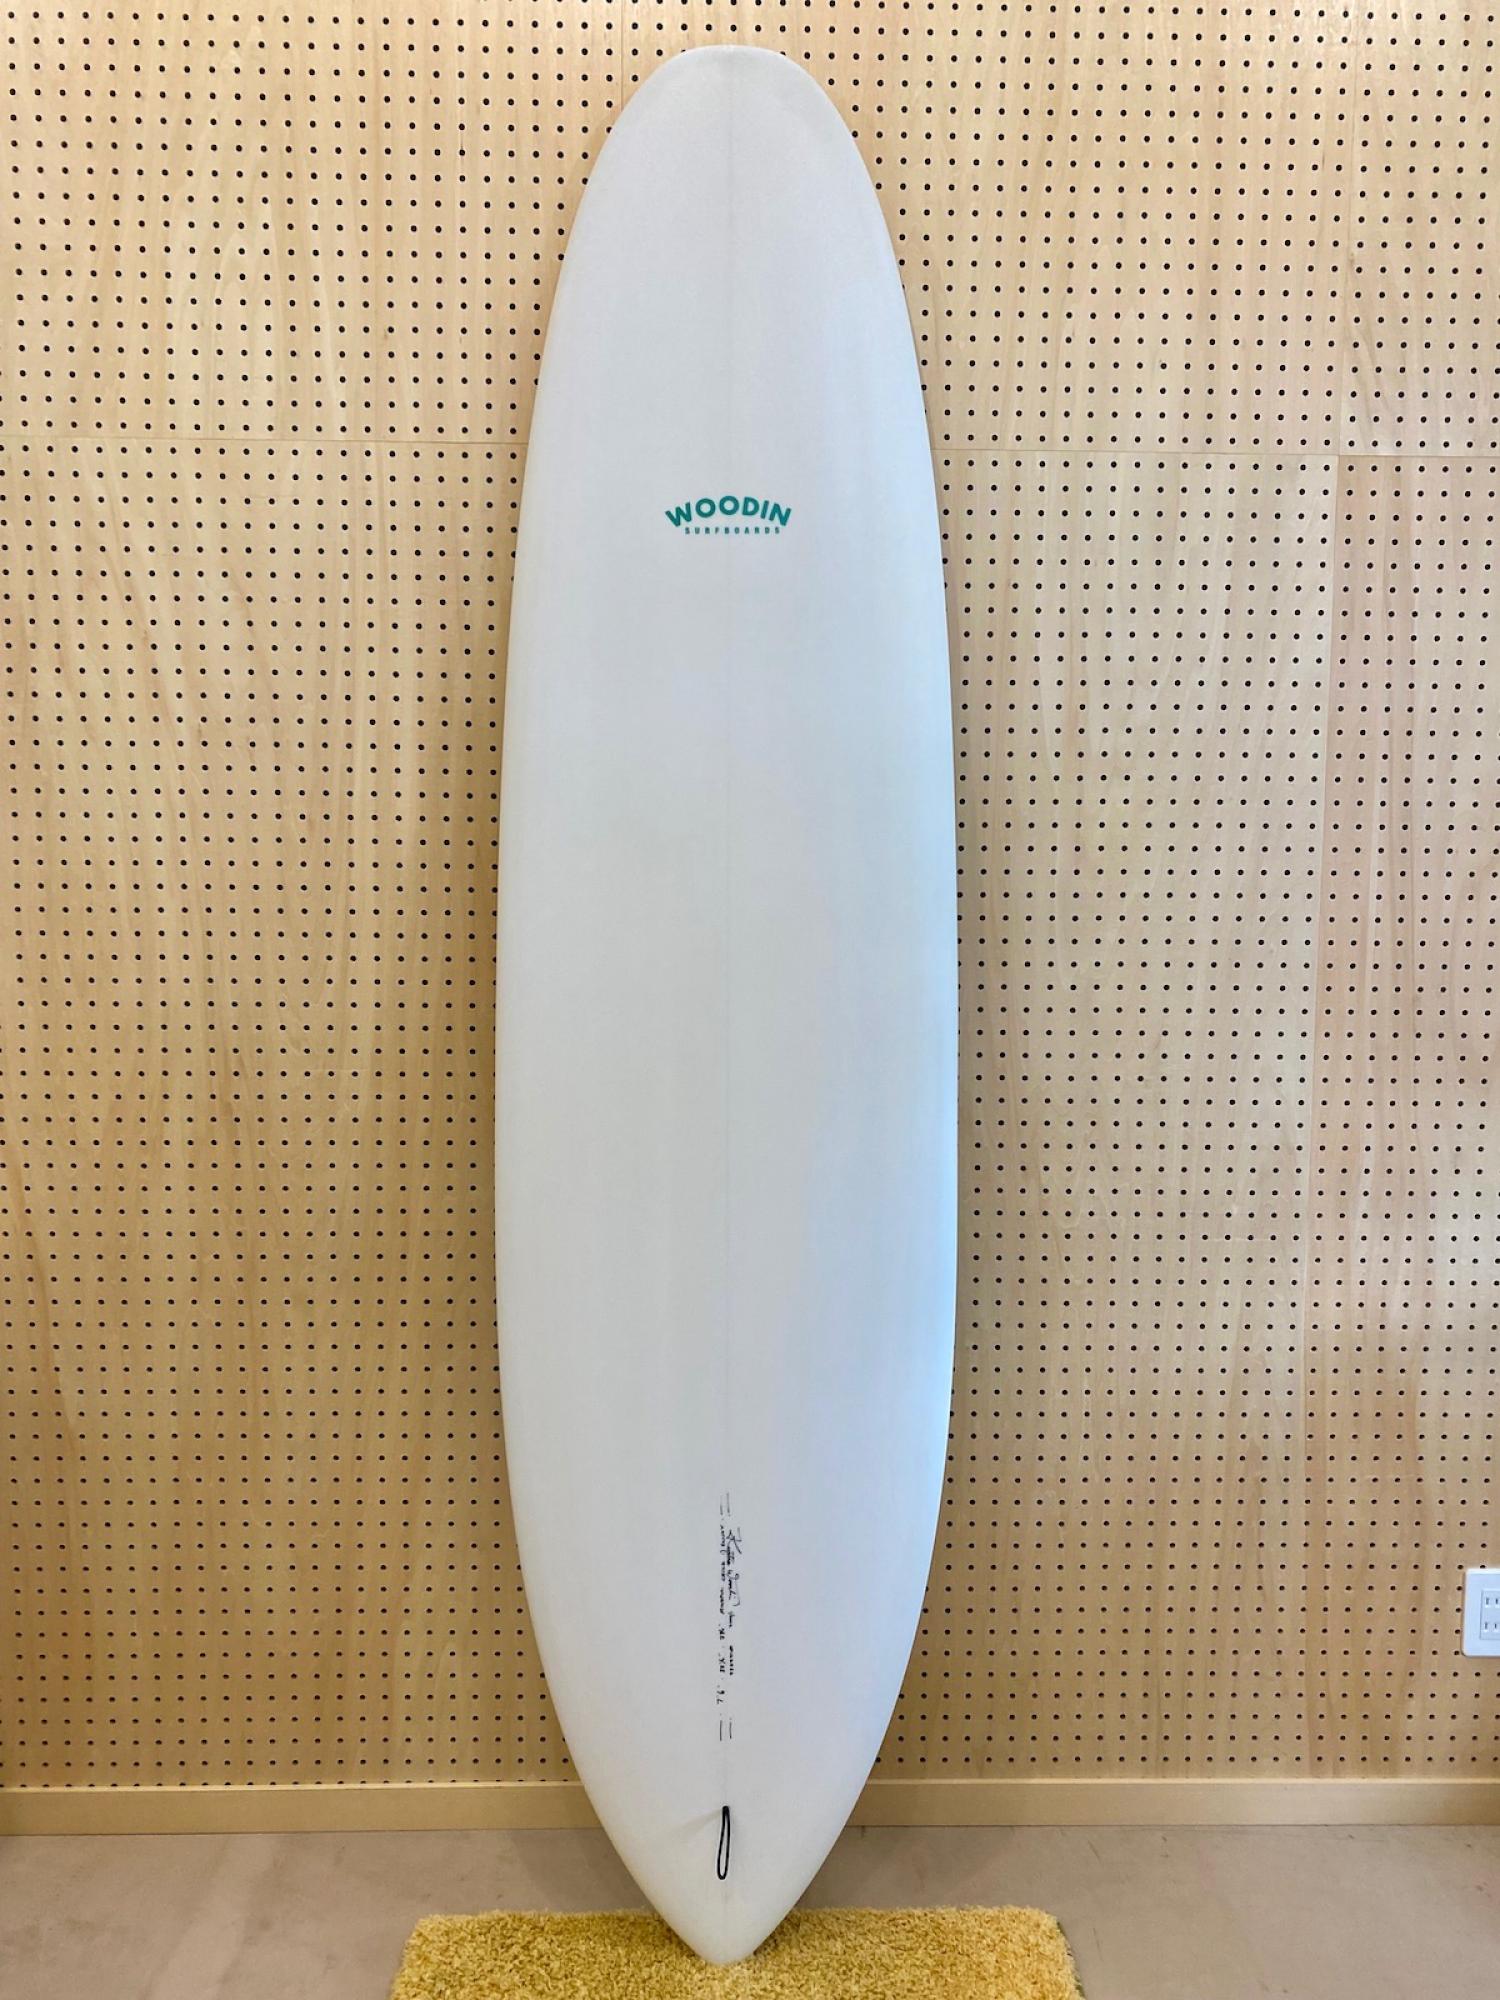 Mindful Child model 7.6 WOODIN SURFBOARDS